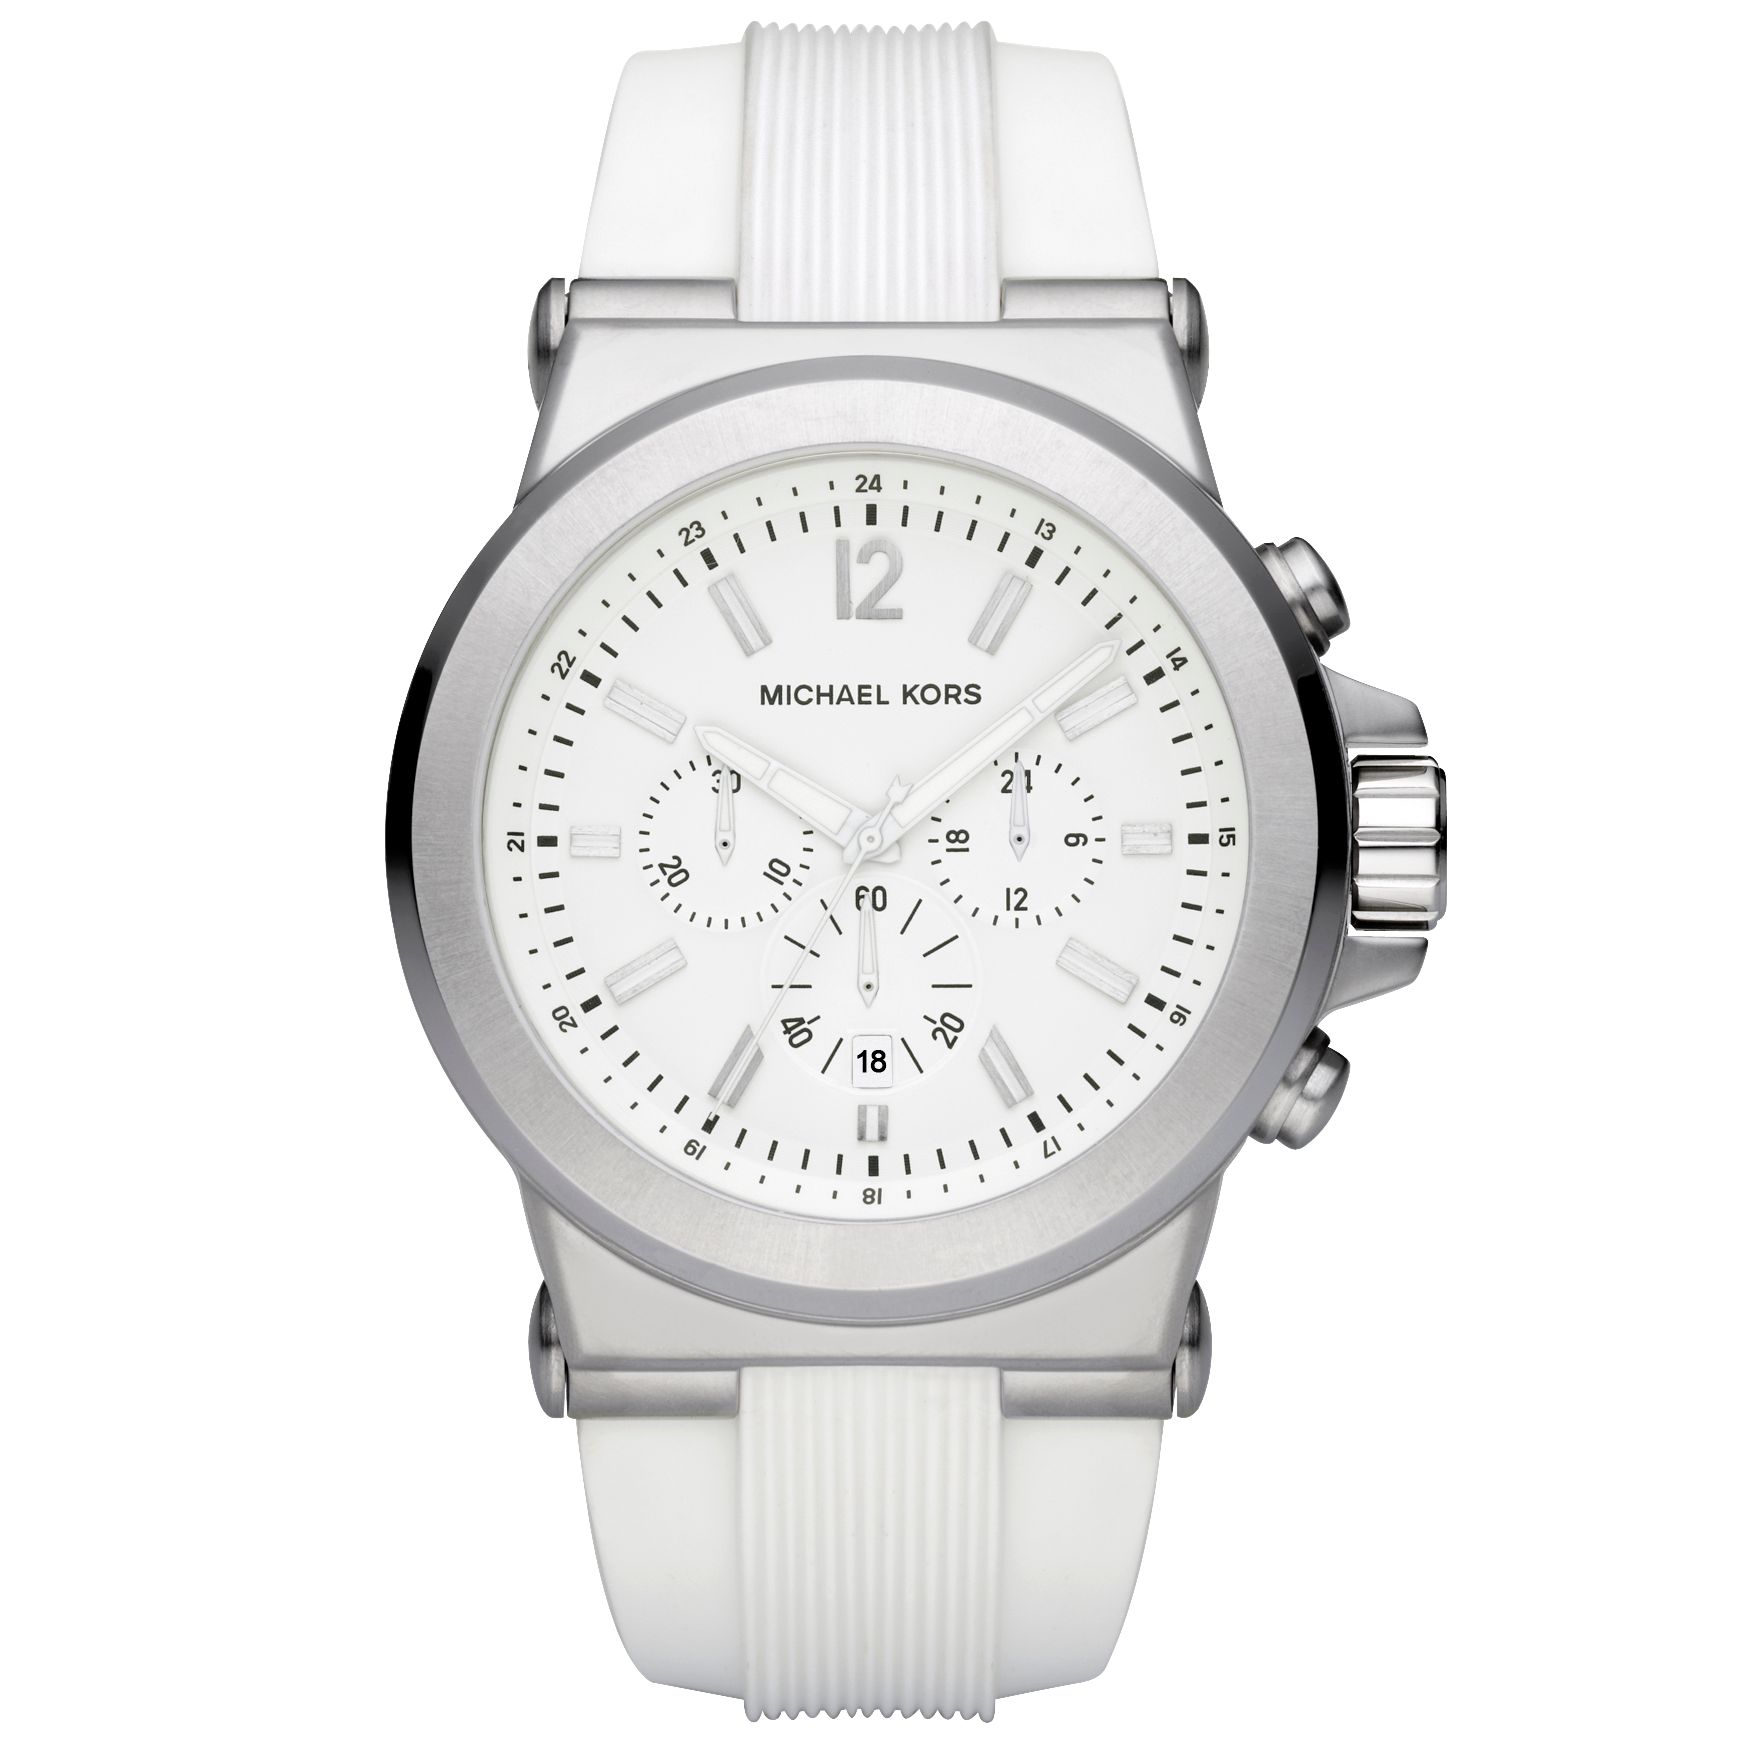 Michael Kors MK8153 Men's Round Dial White Silicone Strap Chronograph Watch at John Lewis